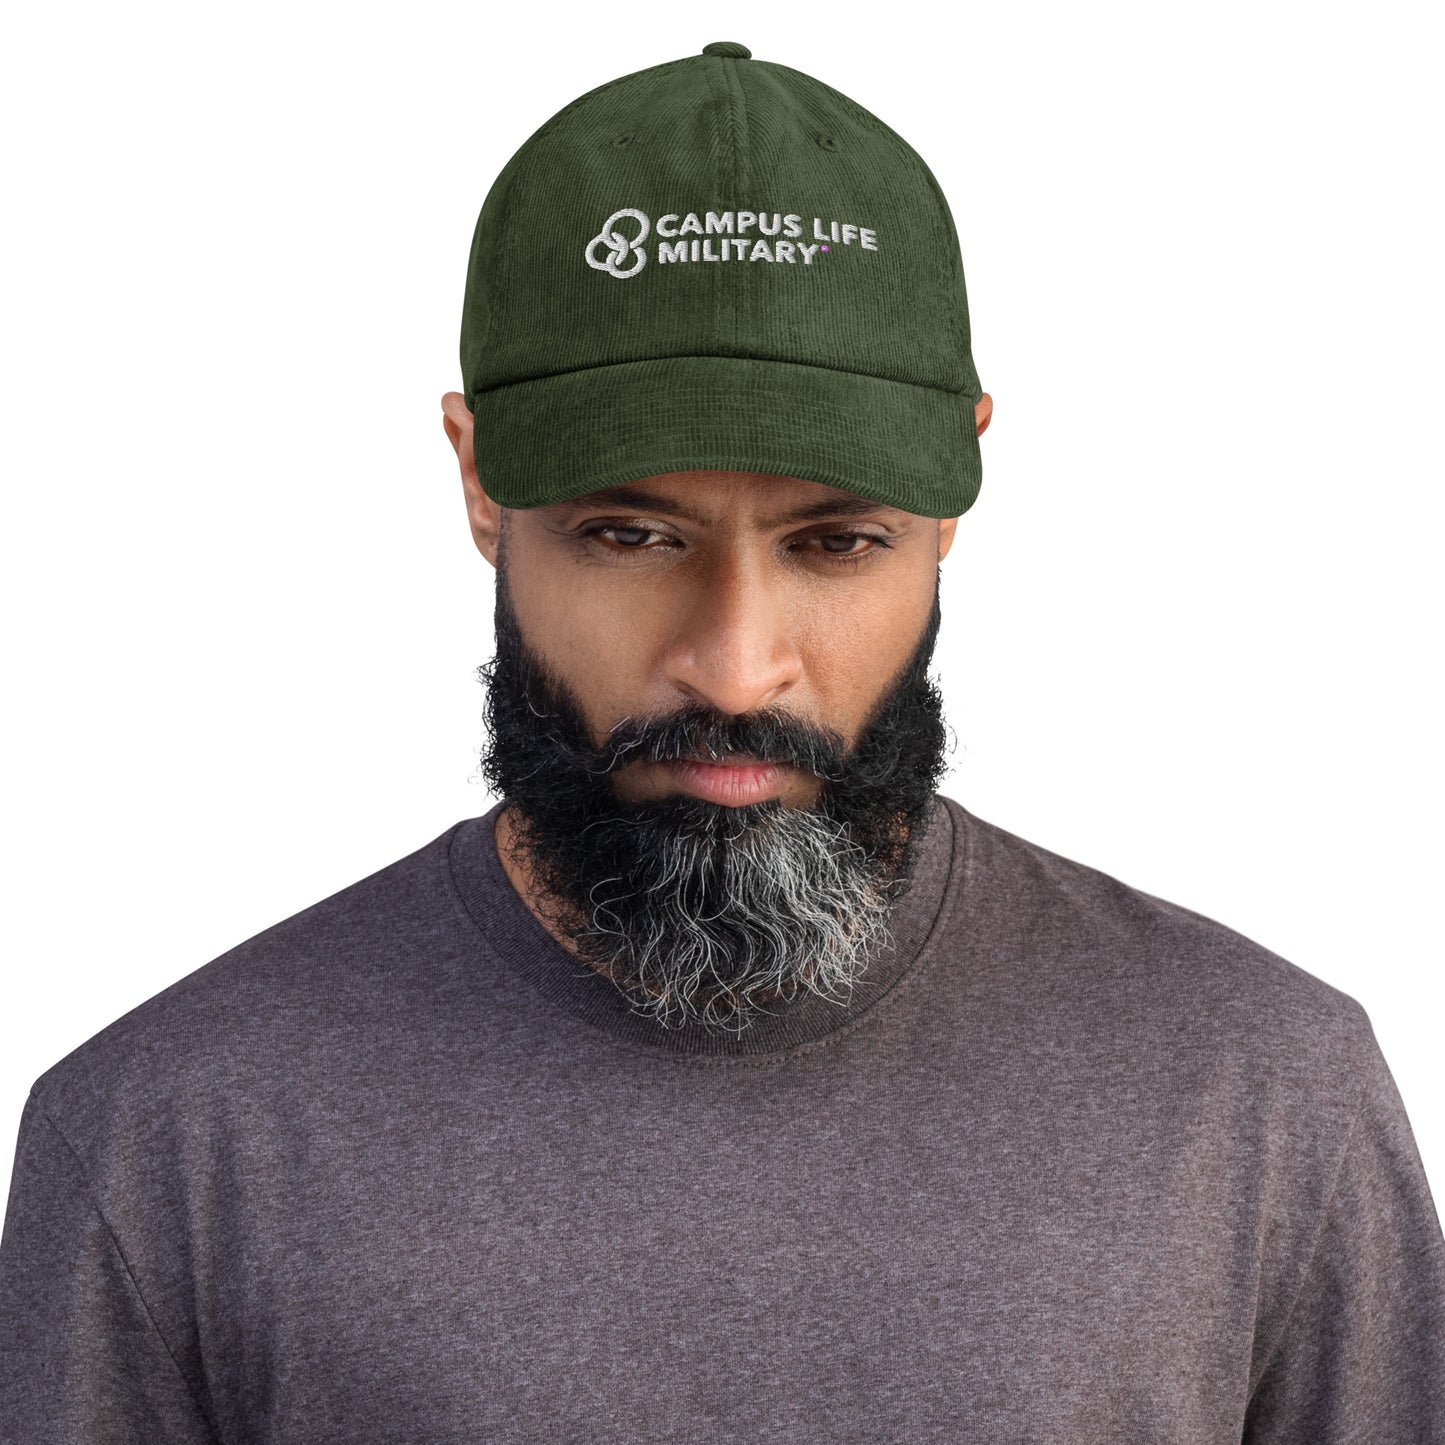 Campus Life Military Corduroy hat